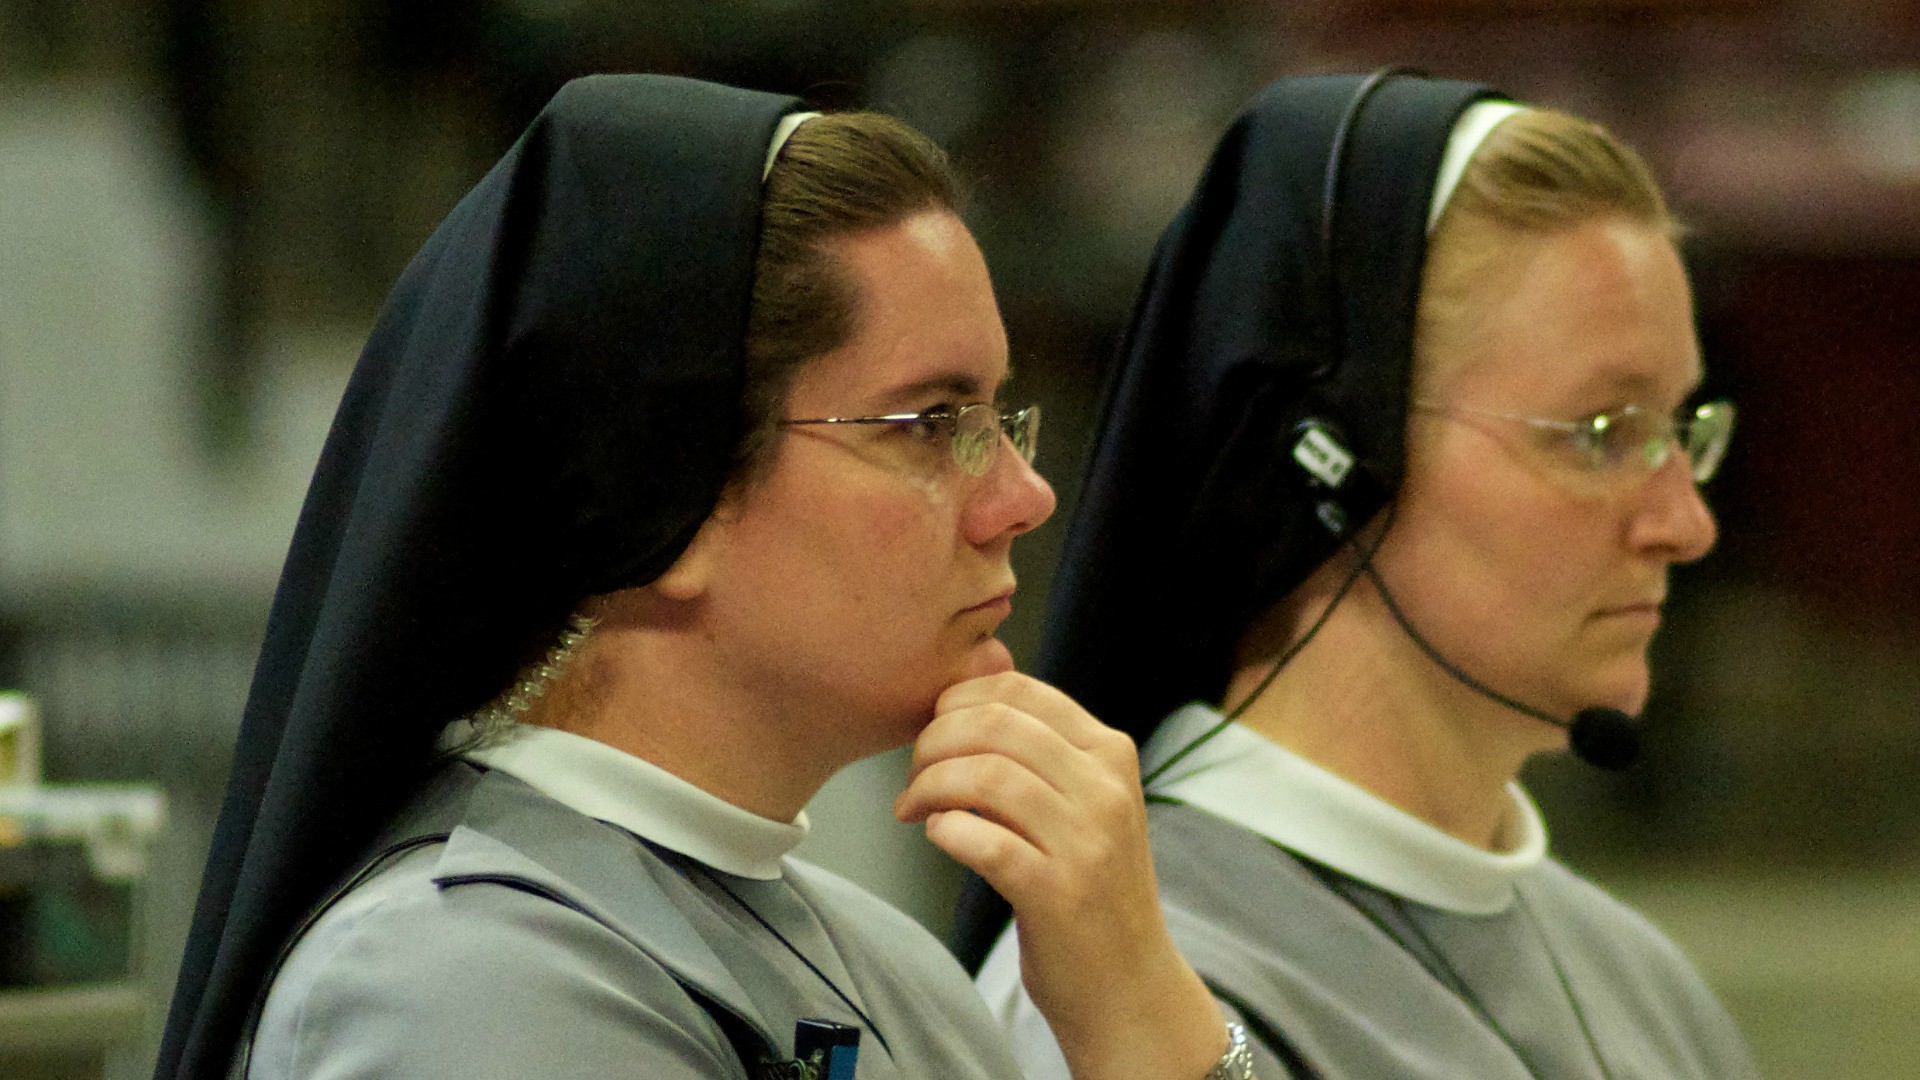 Les vocations religieuses féminines sont en croissance en Grande-Bretagne (Photo: Office of Youth Ministry/Flickr/CC BY-NC-SA 2.0)